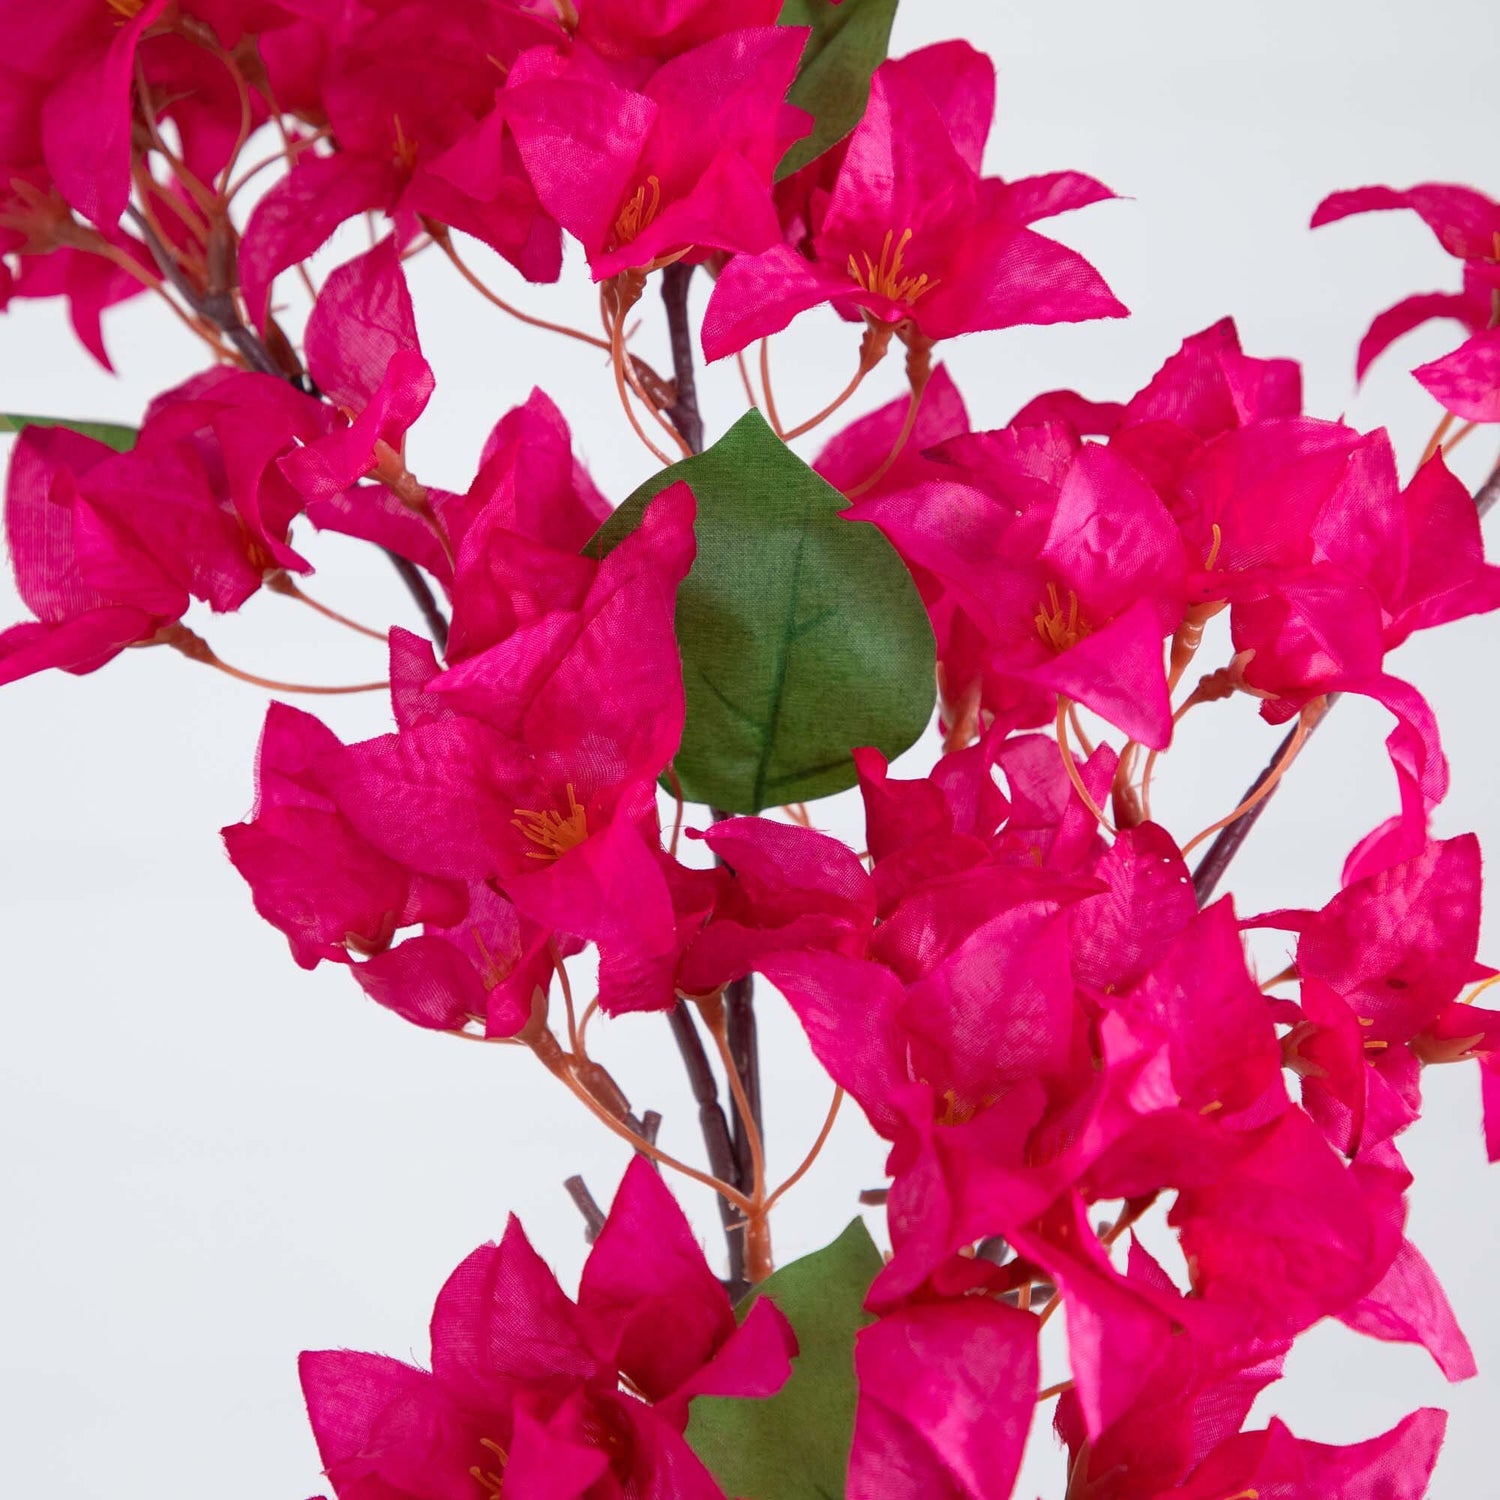 47" Artificial Bougainvillea Flower Stems - Set of 3